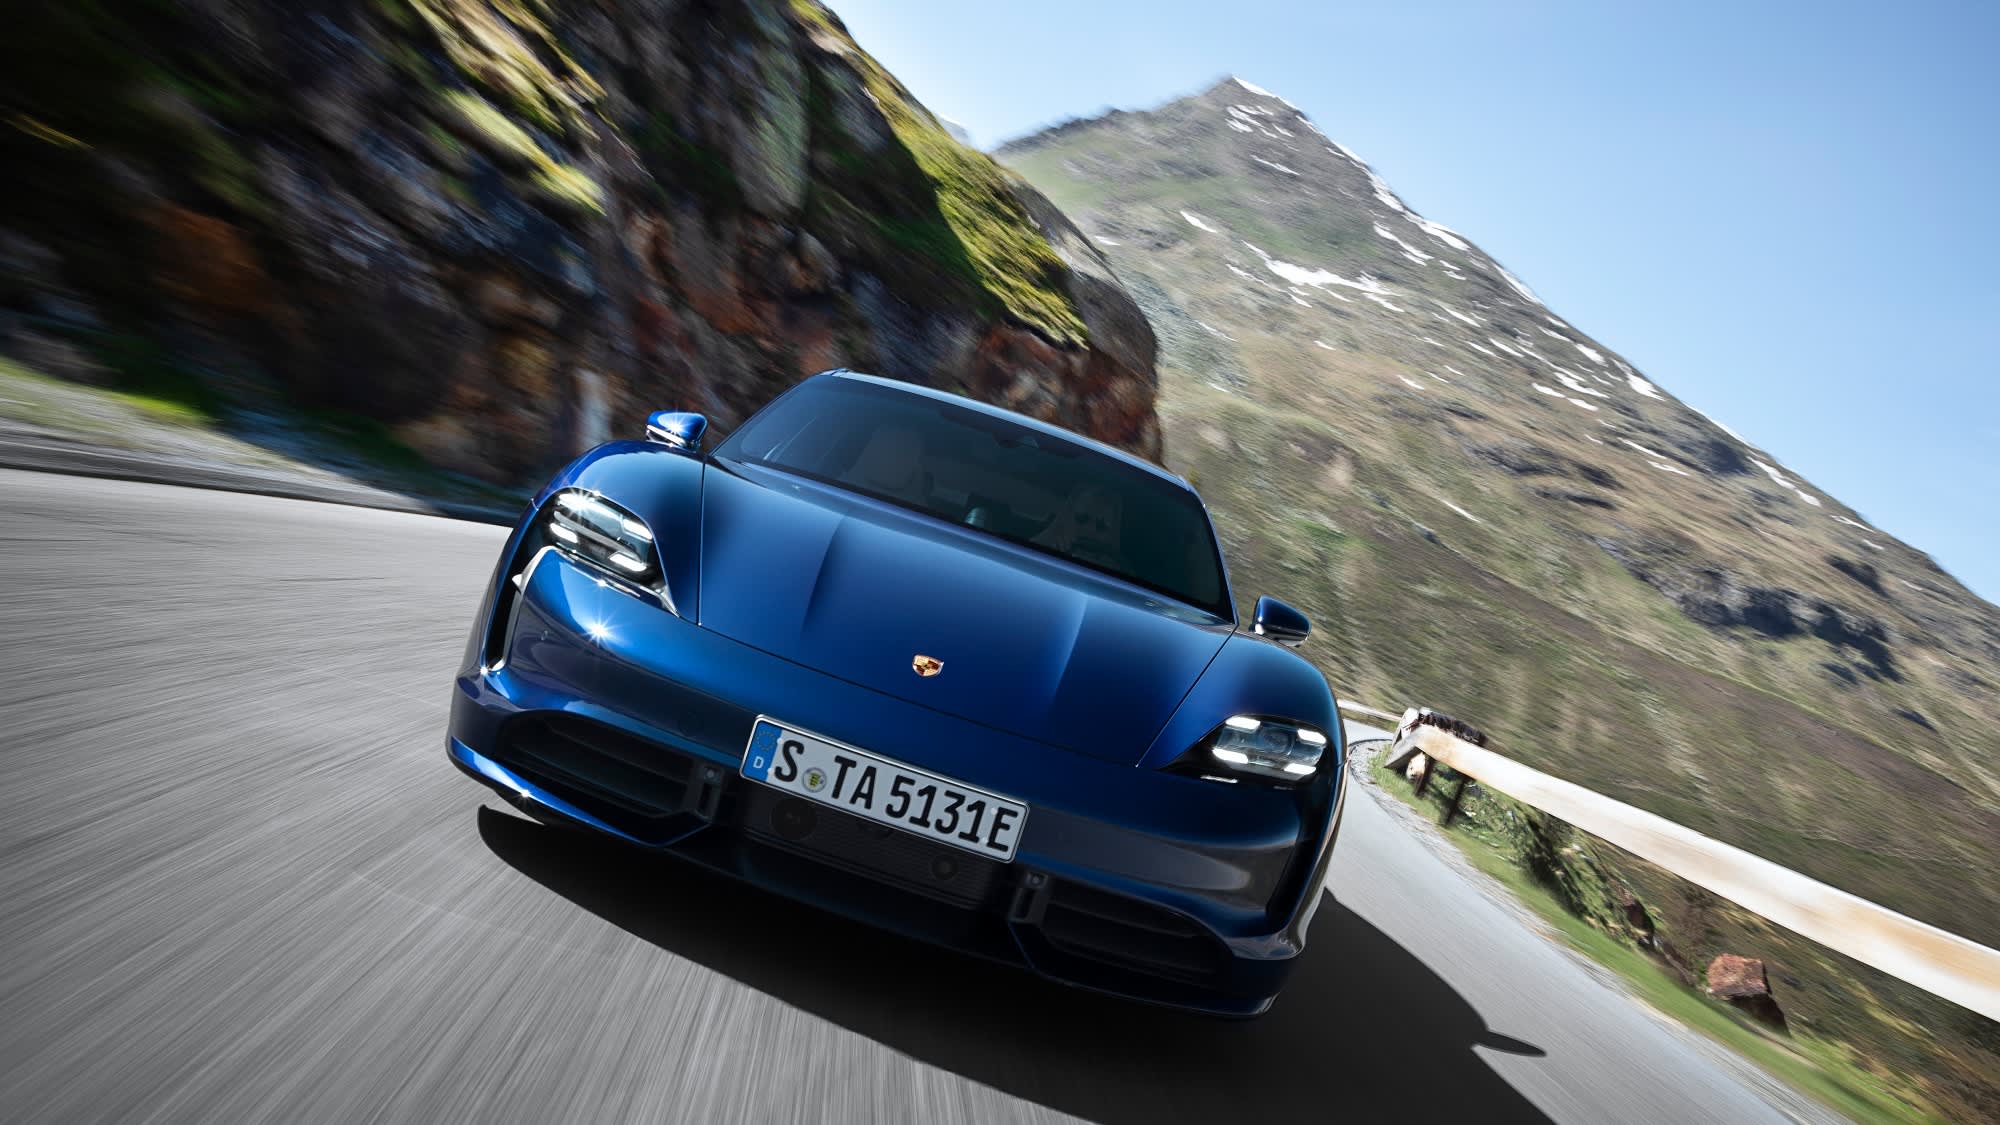 Porsche’s formidable EV plans do not embrace an all-electric 911